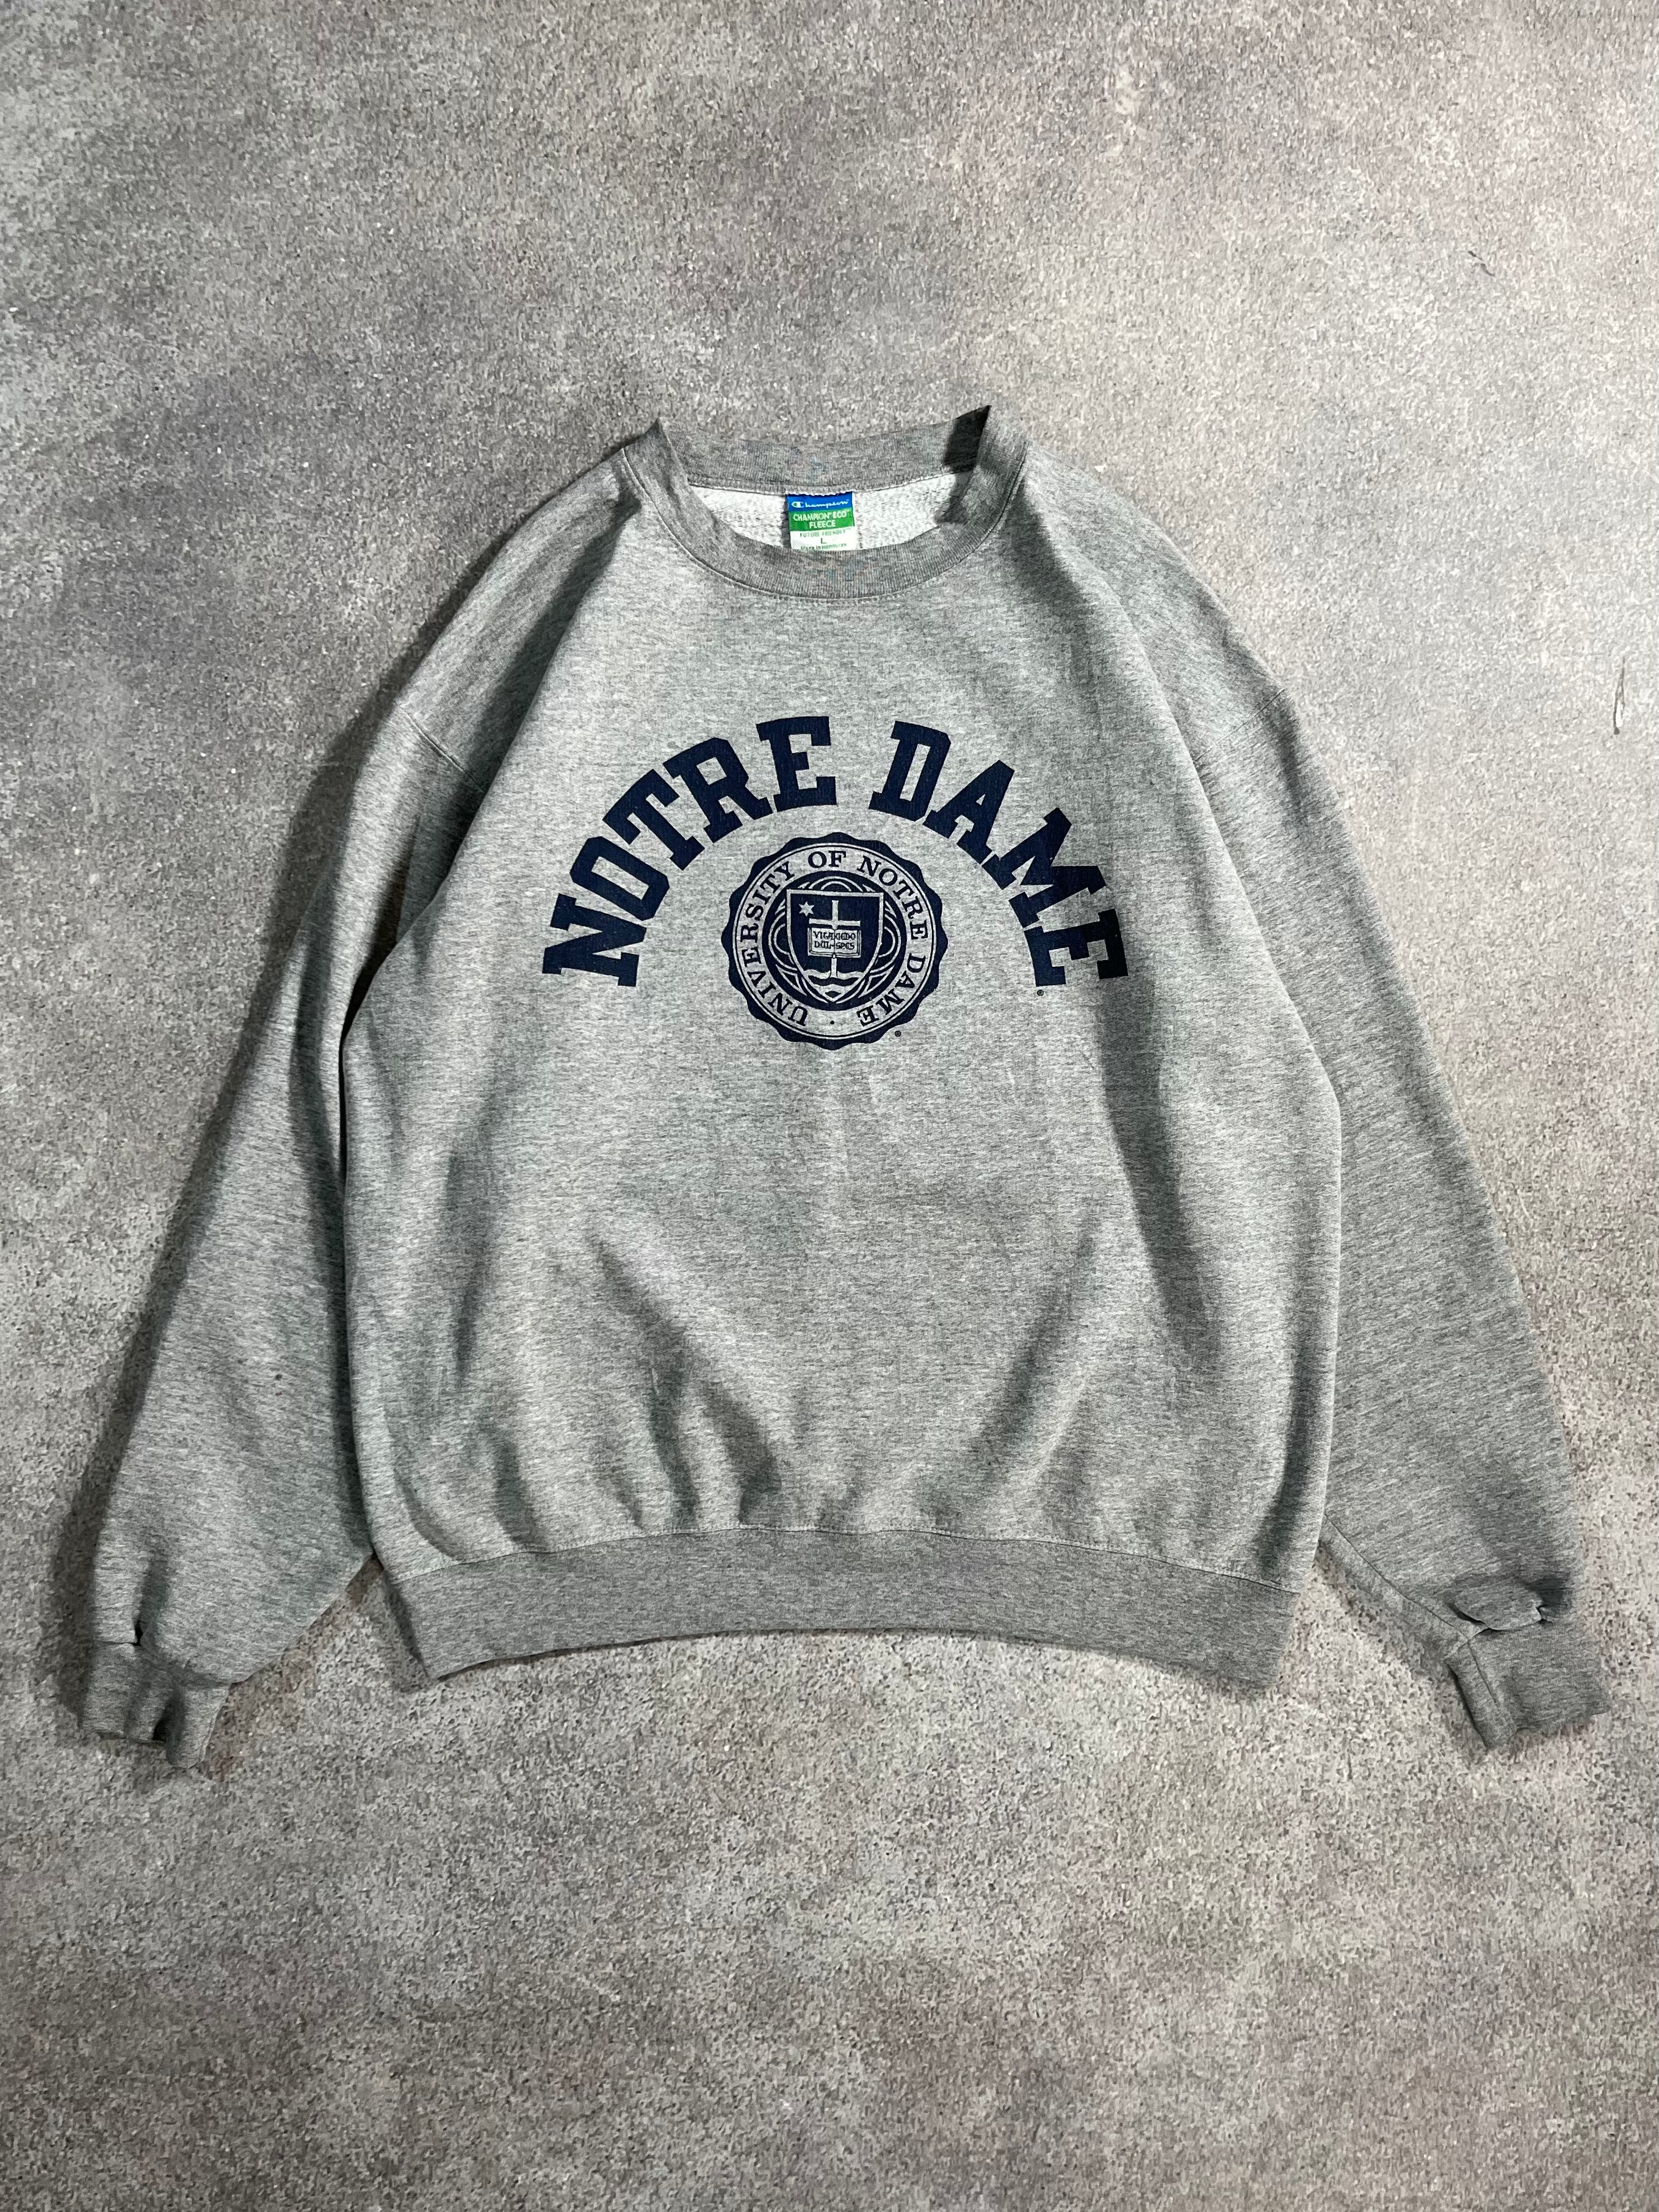 Vintage Notre Dame Sweater Grey  // Medium - RHAGHOUSE VINTAGE